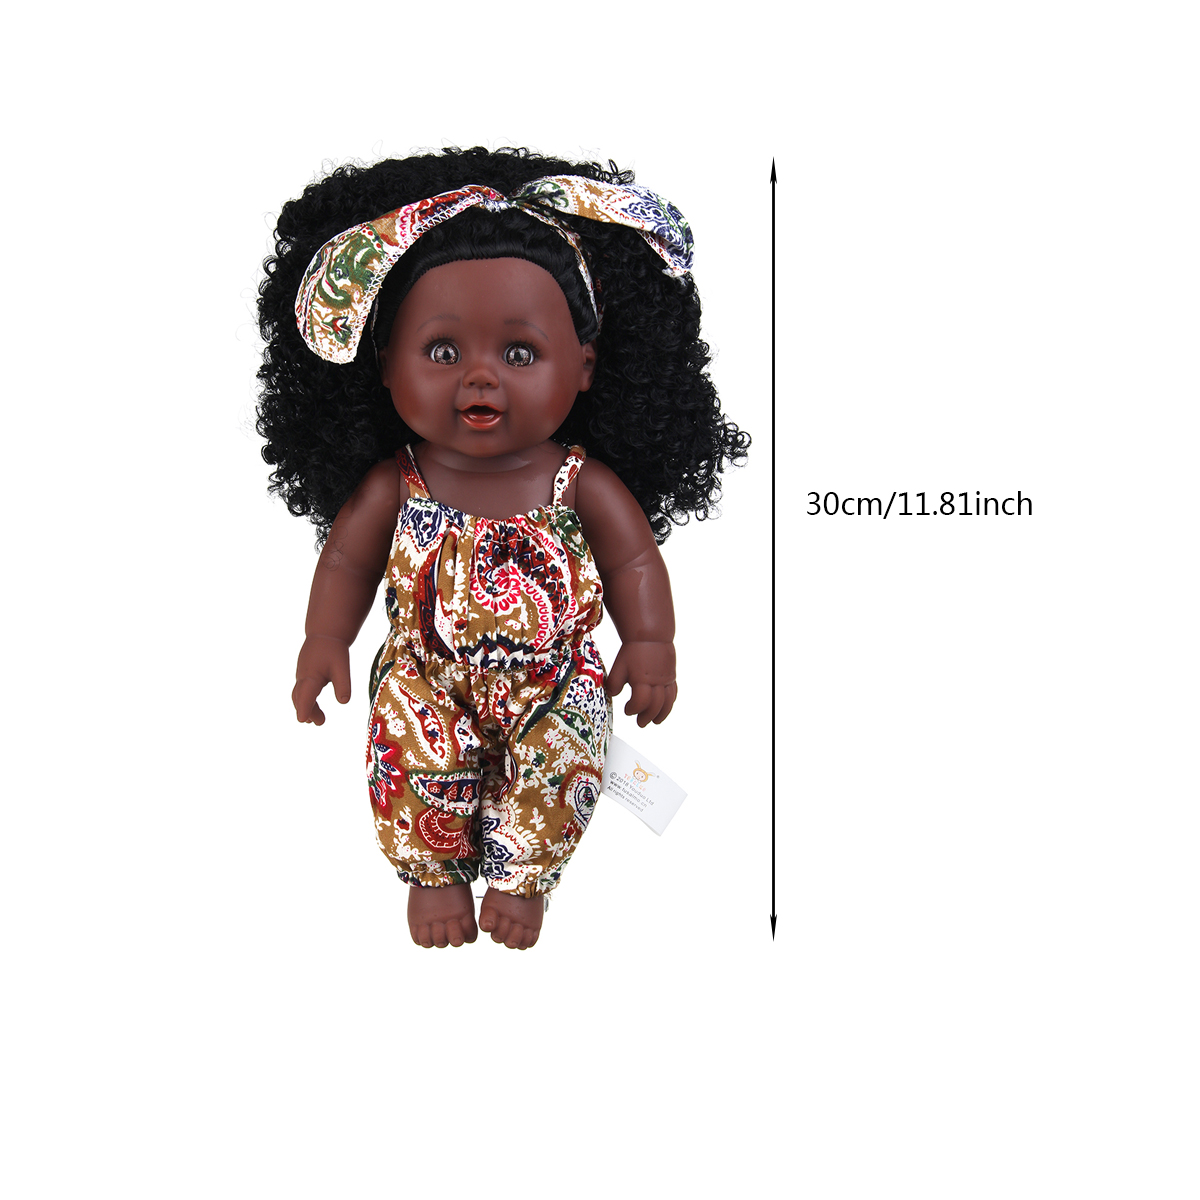 30CM-Silicone-Vinyl-African-Girl-Realistic-Reborn-Lifelike-Newborn-Baby-Doll-Toy-with-360deg-Moveabl-1817562-10